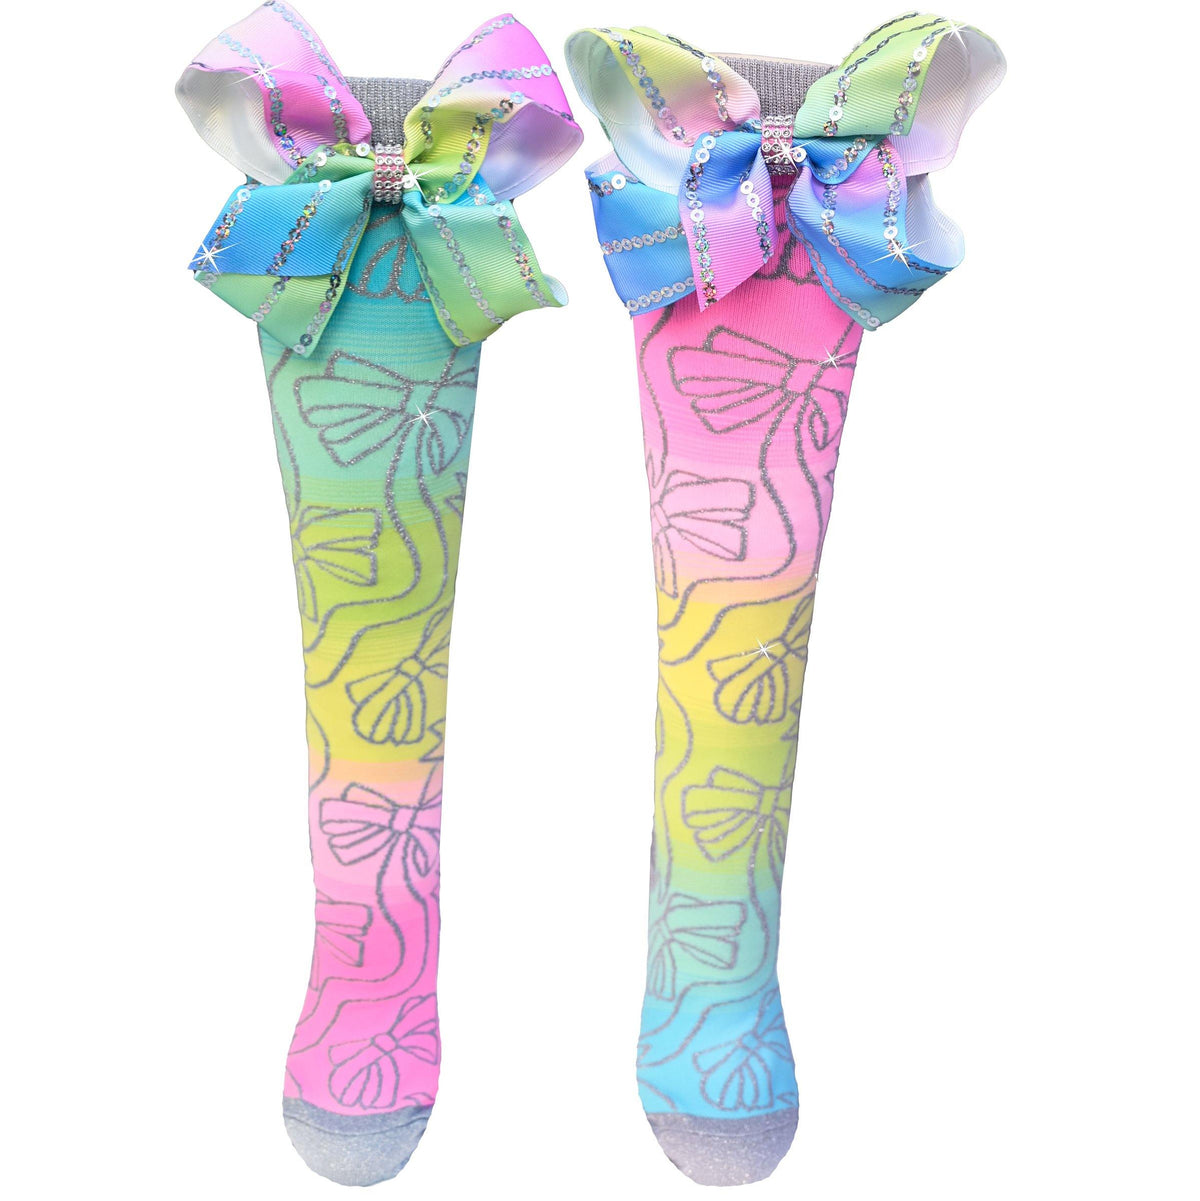 rainbow sparkle socks with bow madmia gifts